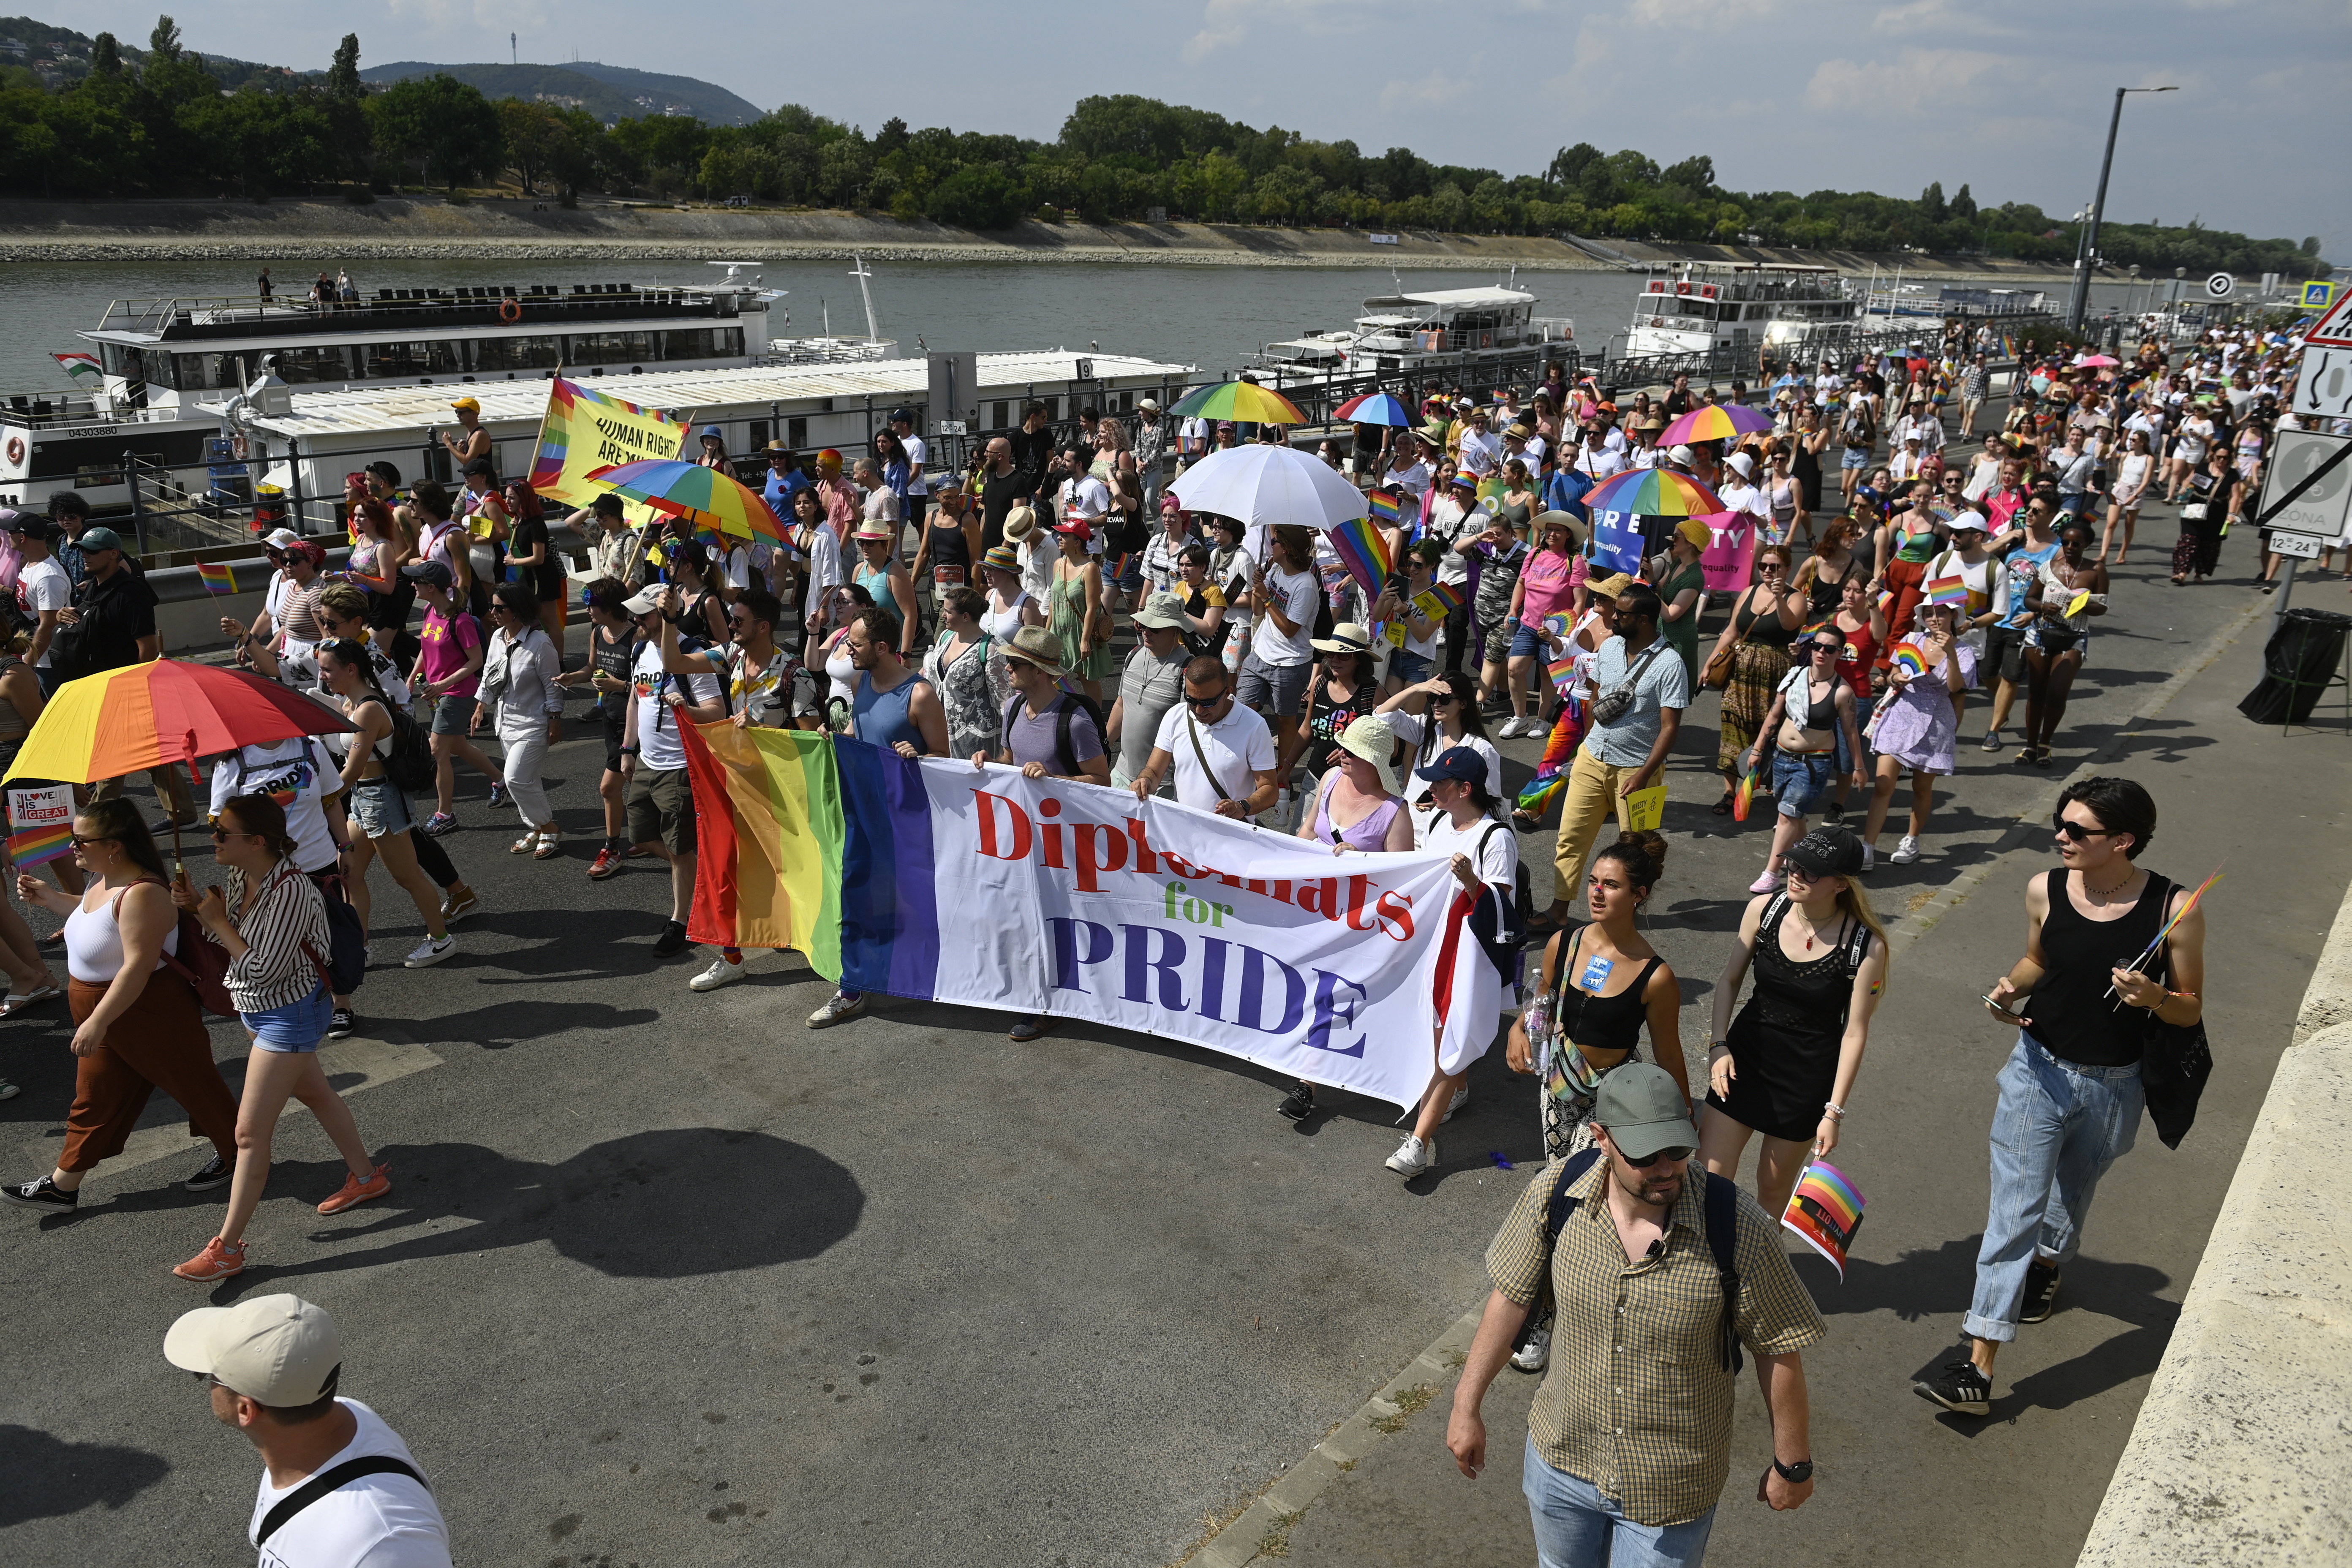 Thousands attend Budapest Pride despite heat